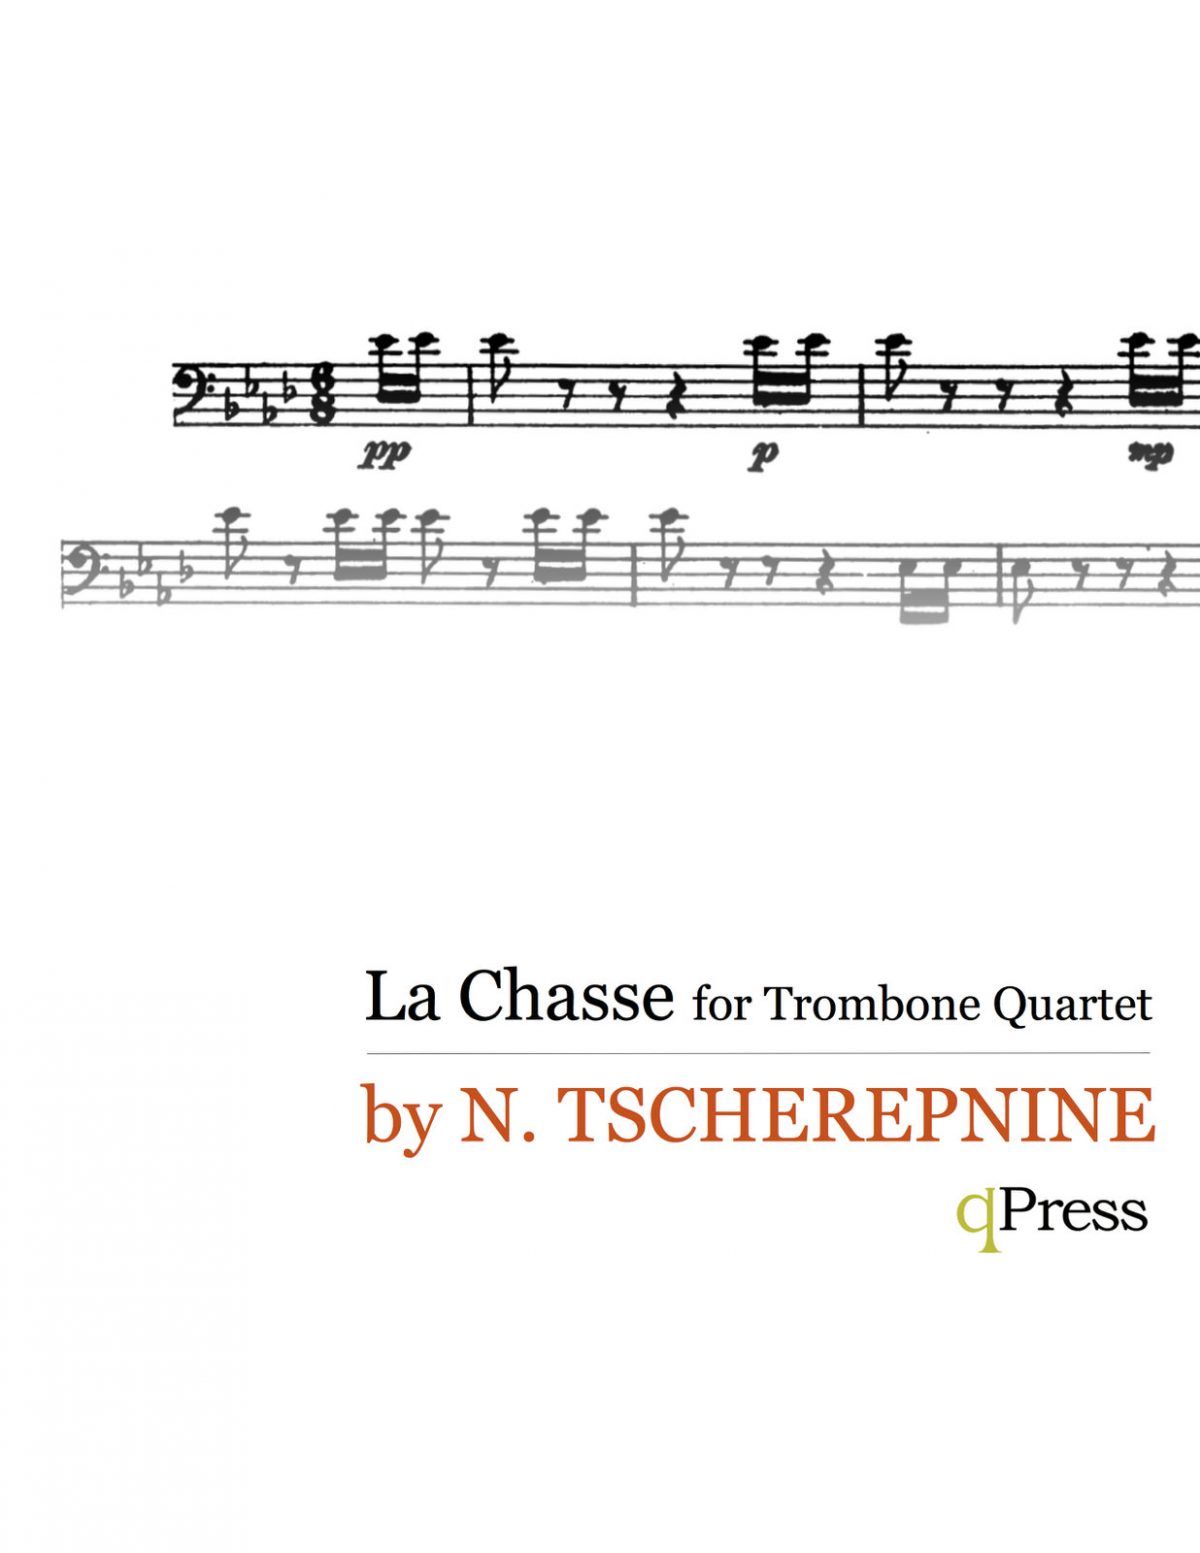 "La Chasse" Trombone Quartet